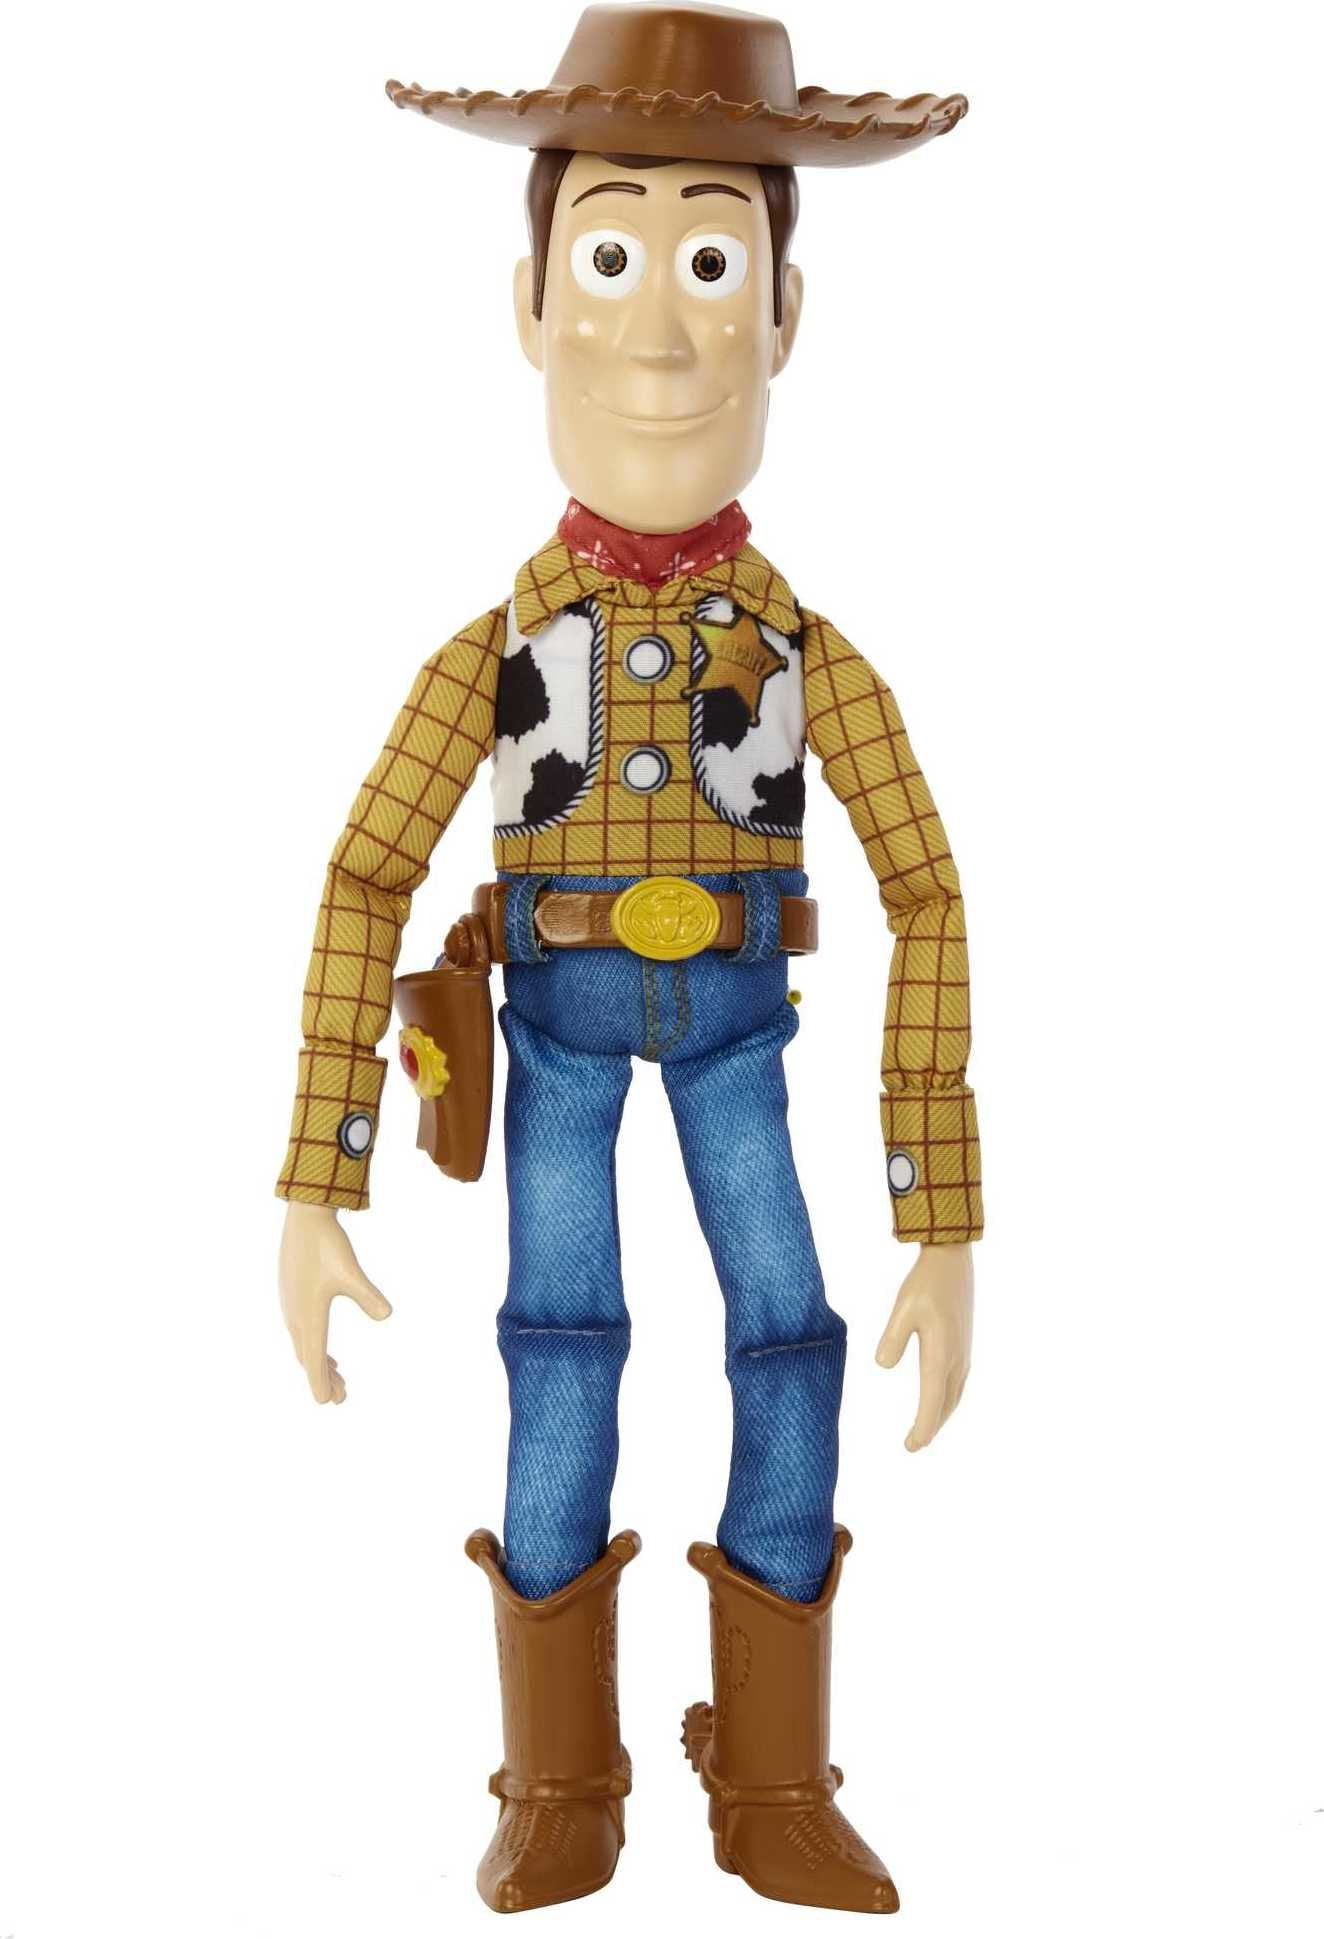 Disney Pixar Toy Story Roundup Fun Woody Talking Toy, 20 Phrases